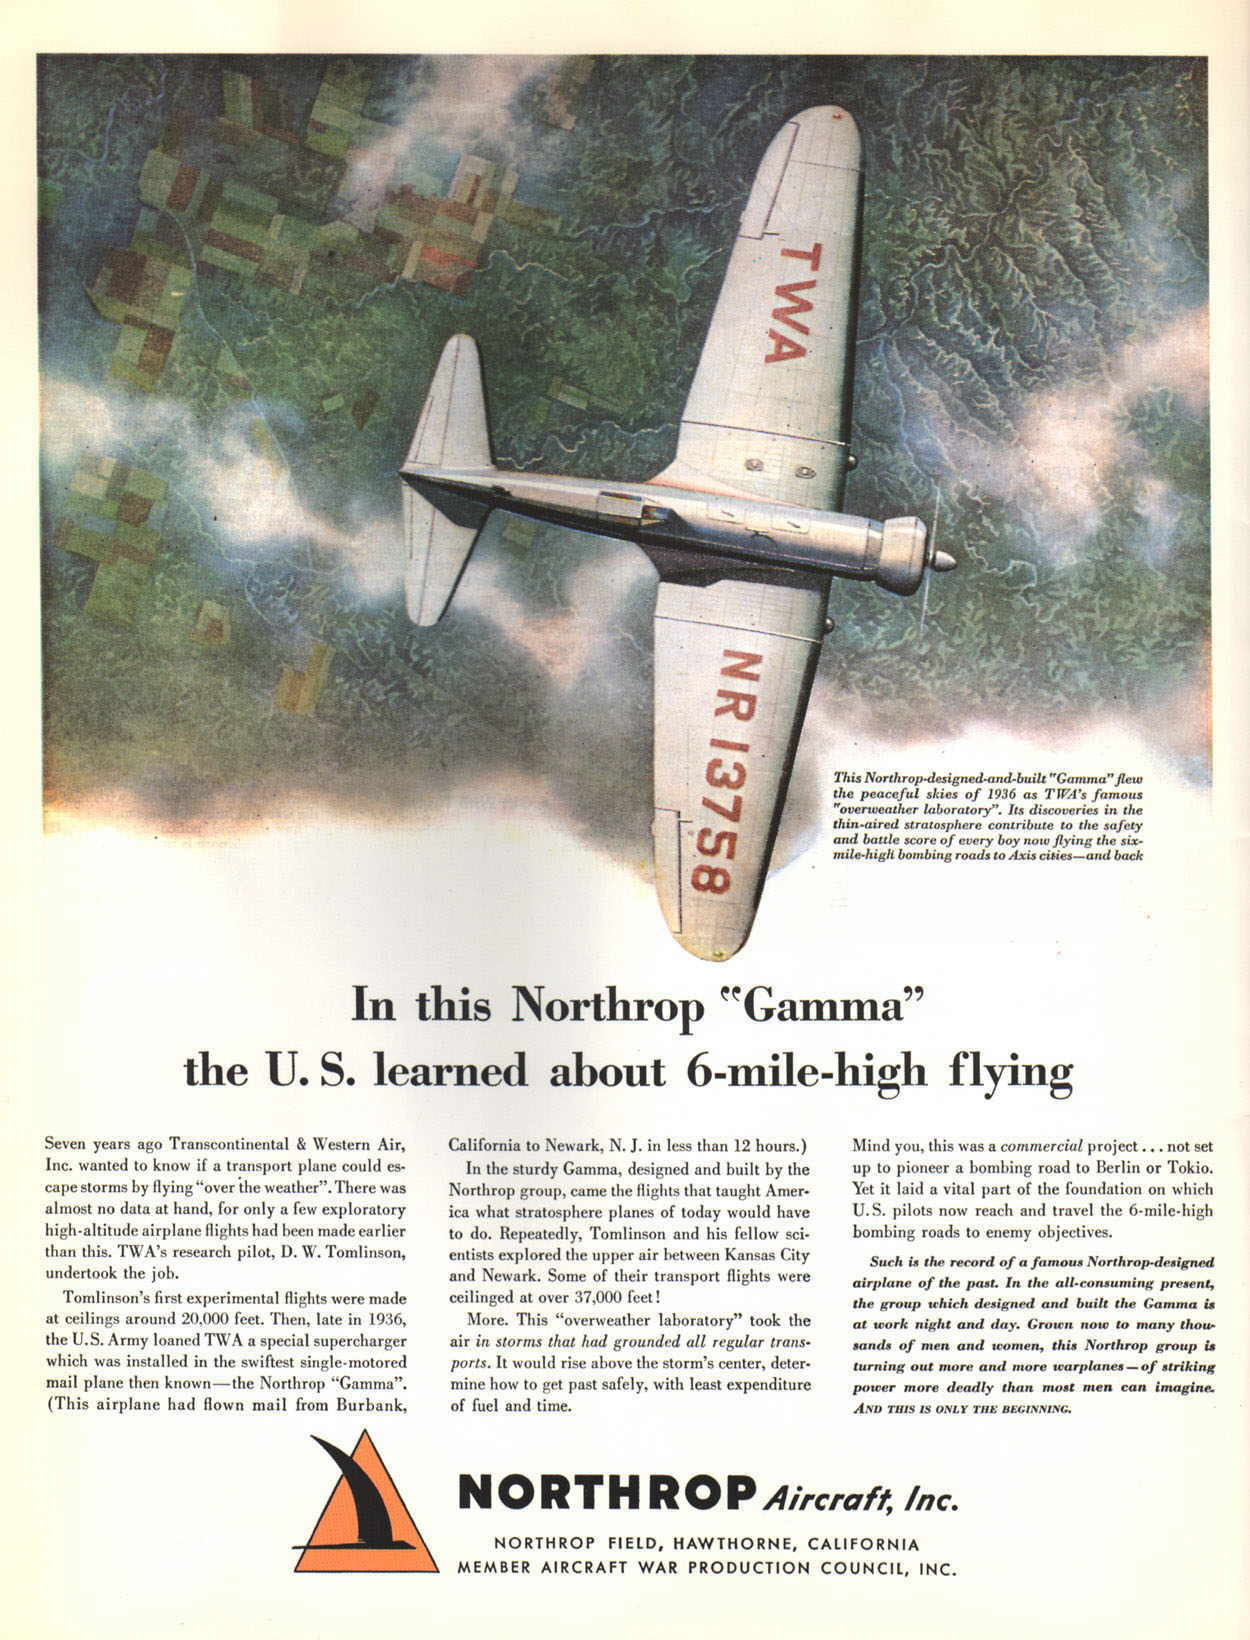 Northrop Aircraft Logo - Northup Gamma